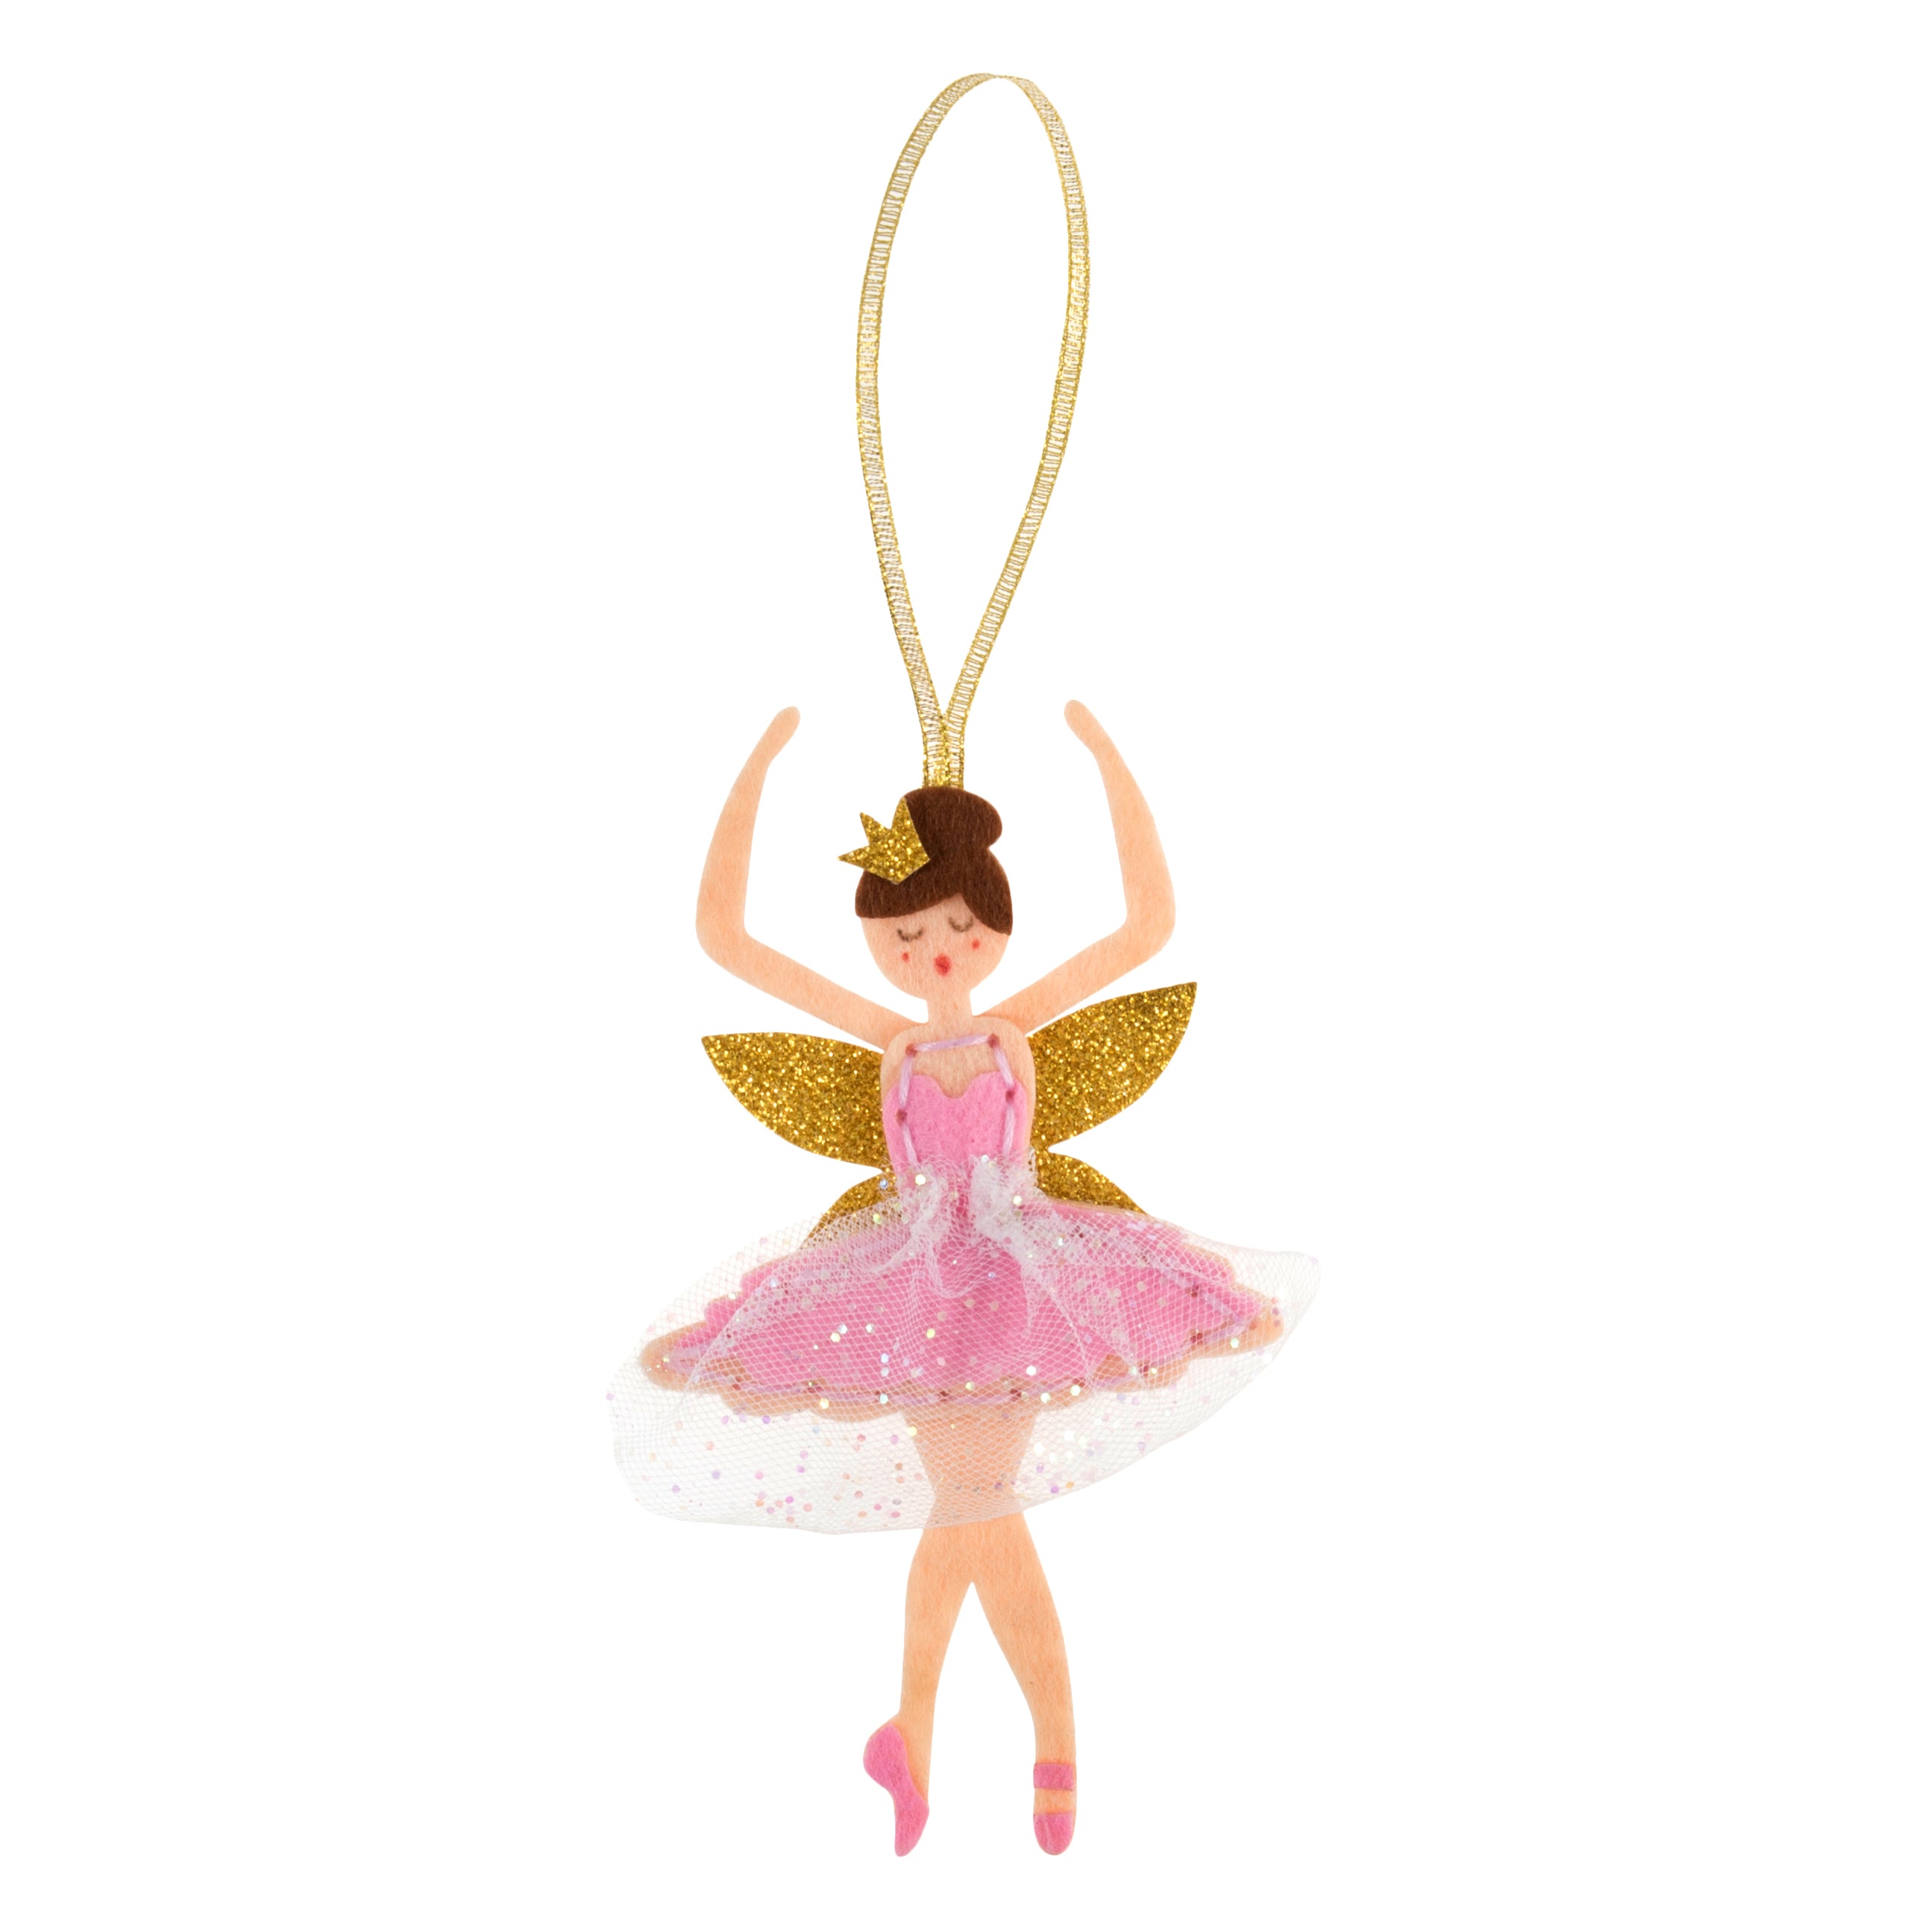 Trimits Felt Decoration Kit: Christmas Sugar Plum Fairy